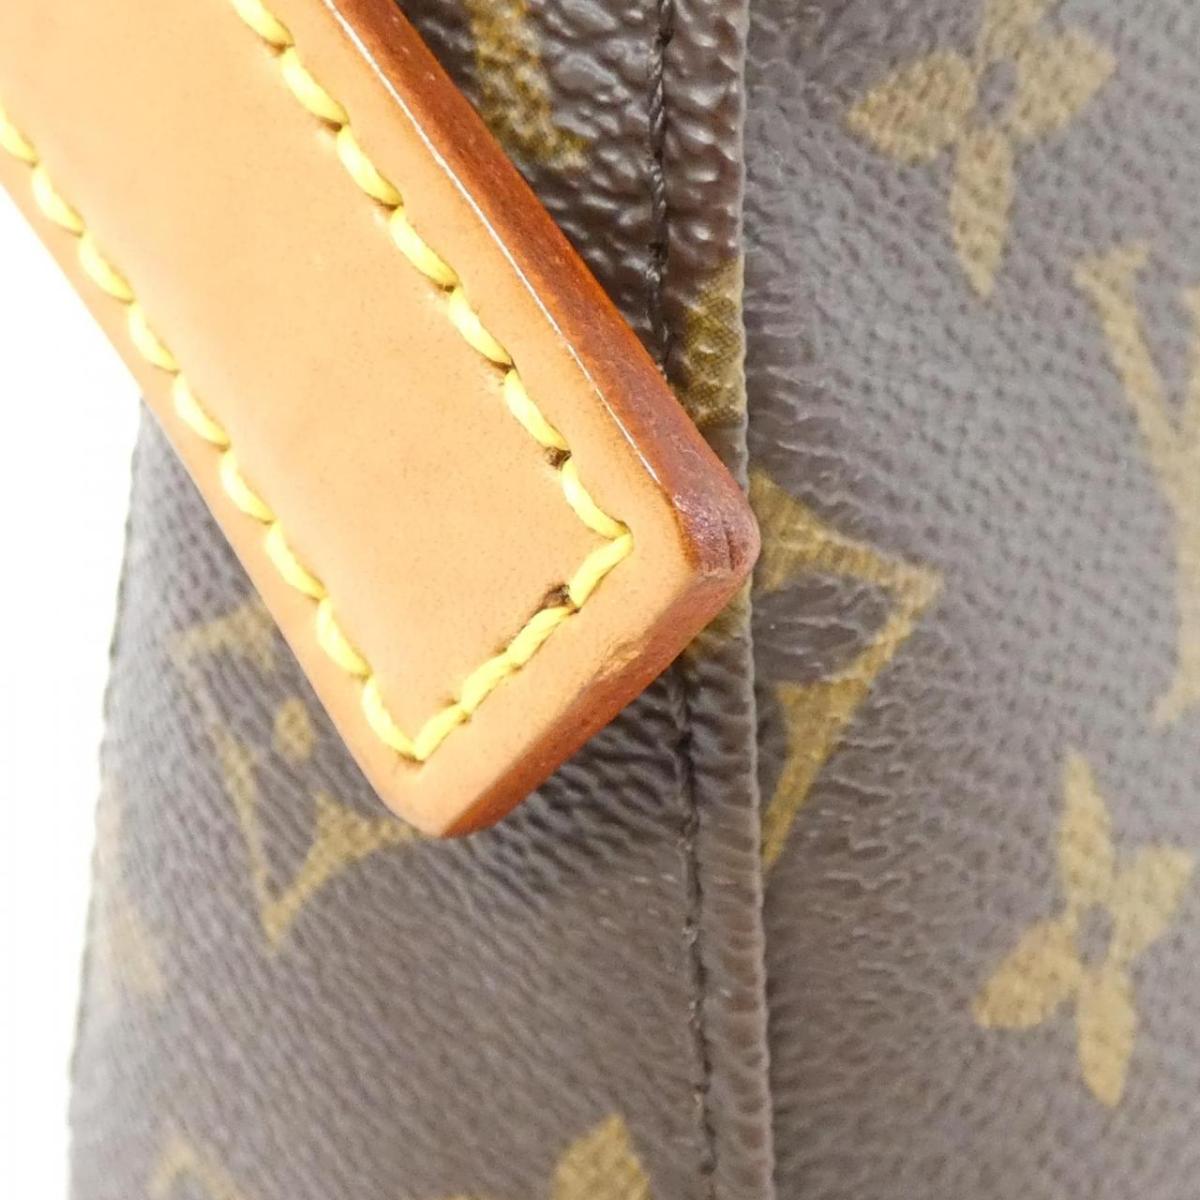 Louis Vuitton Monogram Loo MM M51146 Shoulder Bag